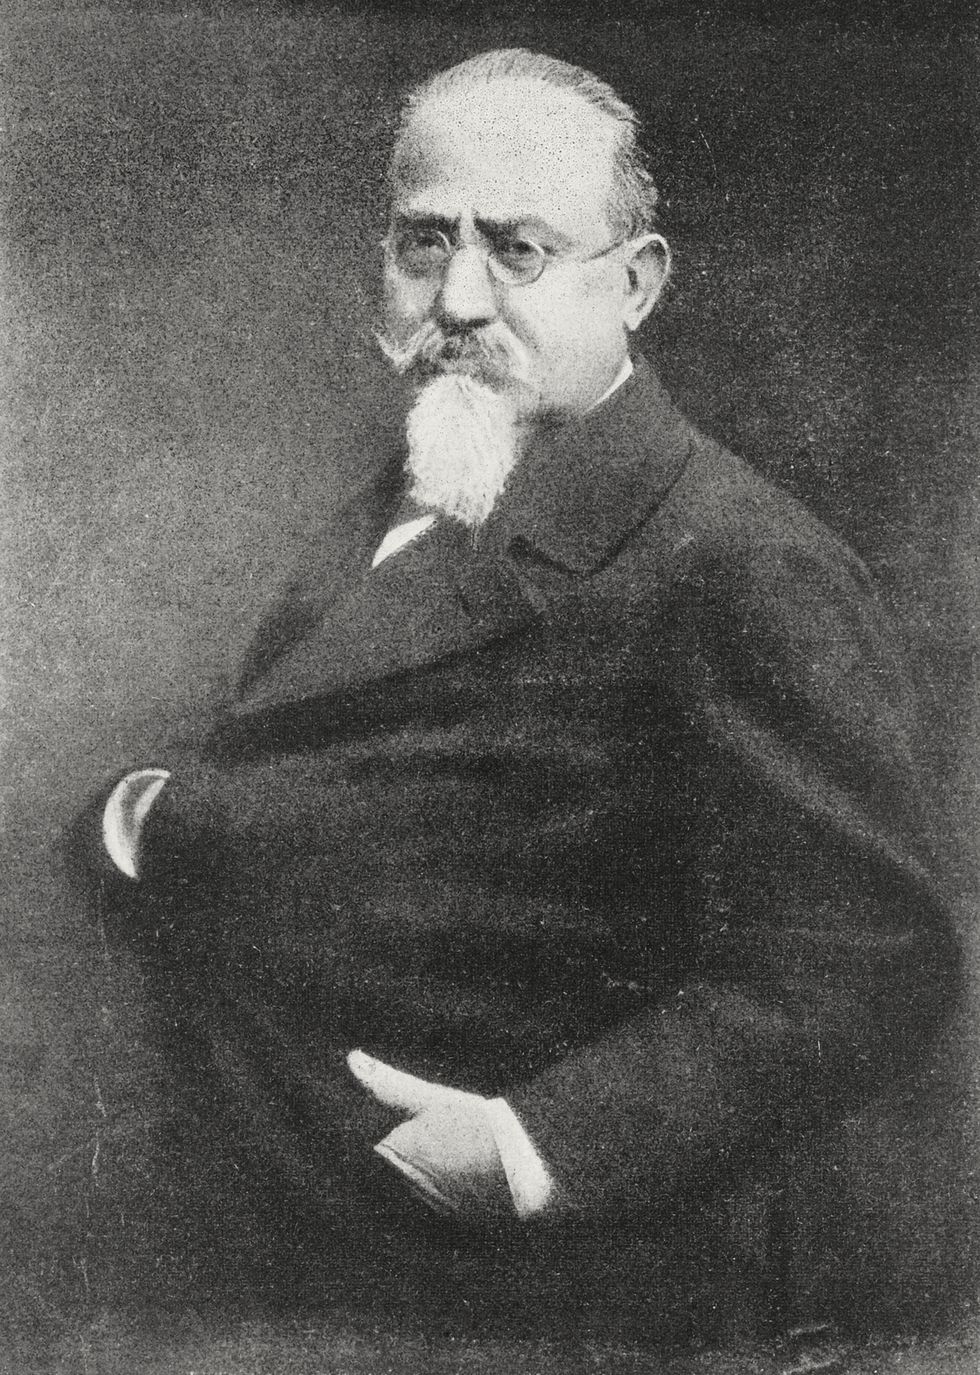 portrait of cesare lombroso 1835 1909, italian physician and anthropologist, from lillustrazione italiana, year xxxiii, no 16, april 1906